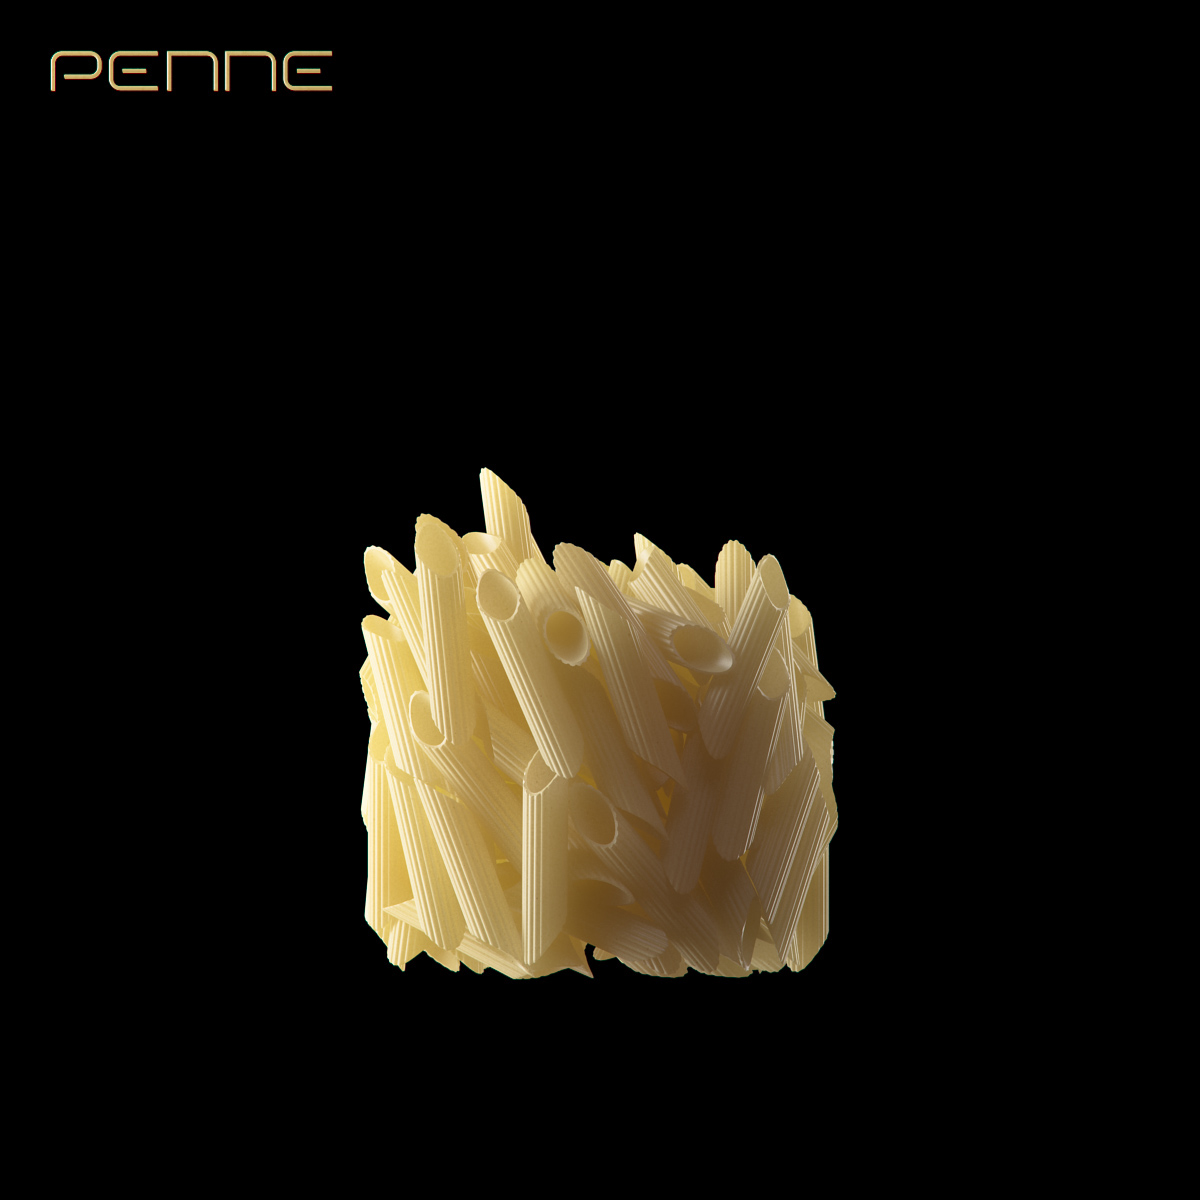 jar jars Pasta glass 3D rendering 3dsmax vray CG Makula Turbosquid texturing modeling penne visualization